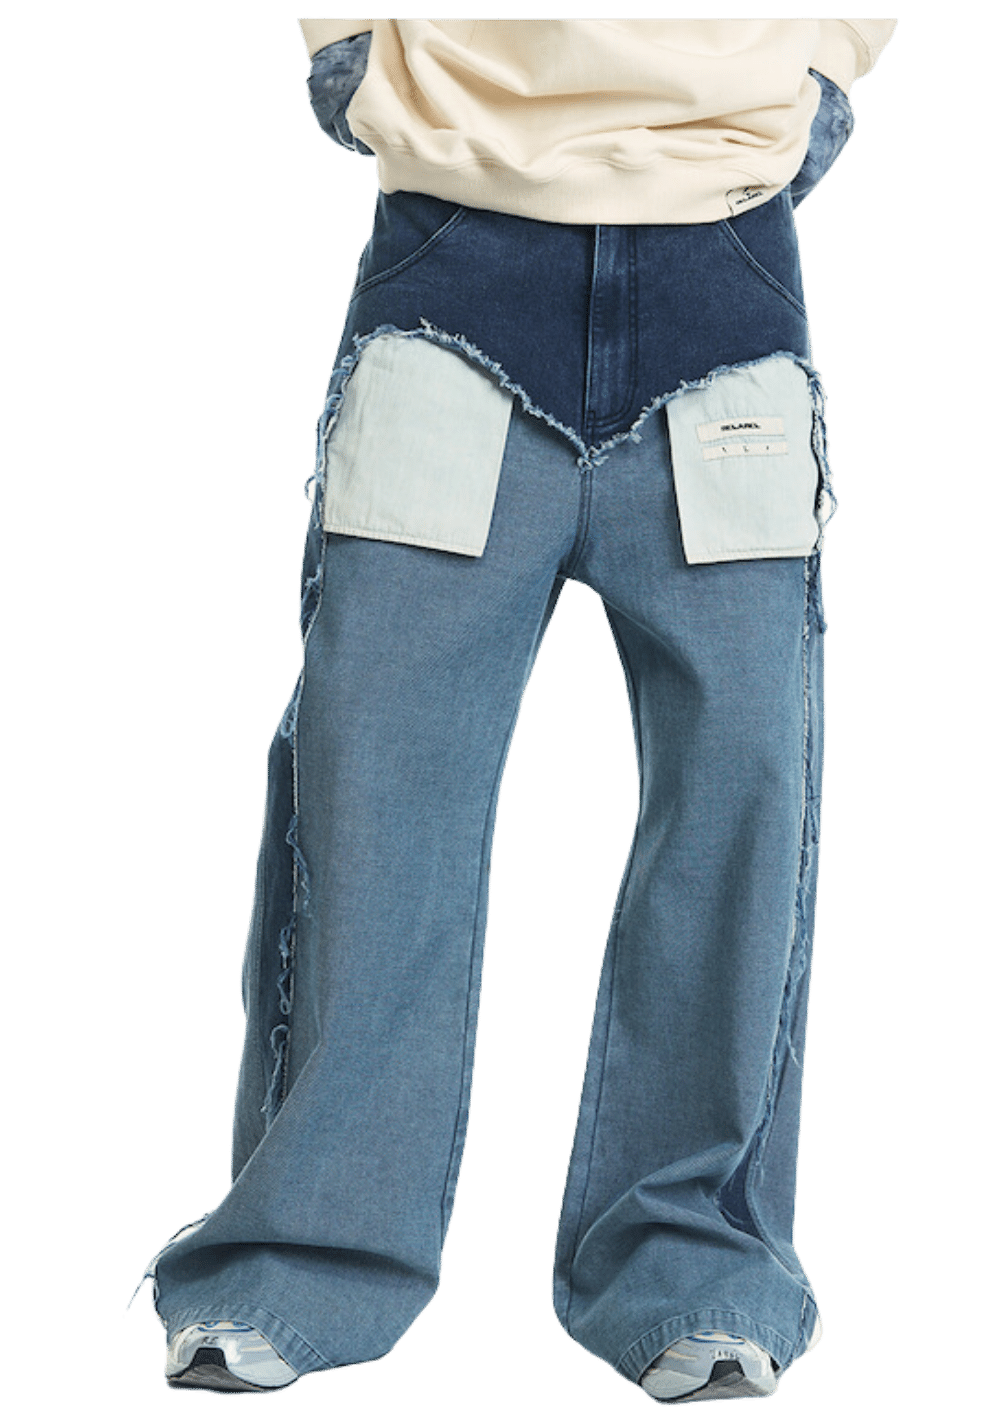 Deconstructed Washed Frayed Edge Jeans - PSYLOS 1, Deconstructed Washed Frayed Edge Jeans, Pants, RELABEL, PSYLOS 1